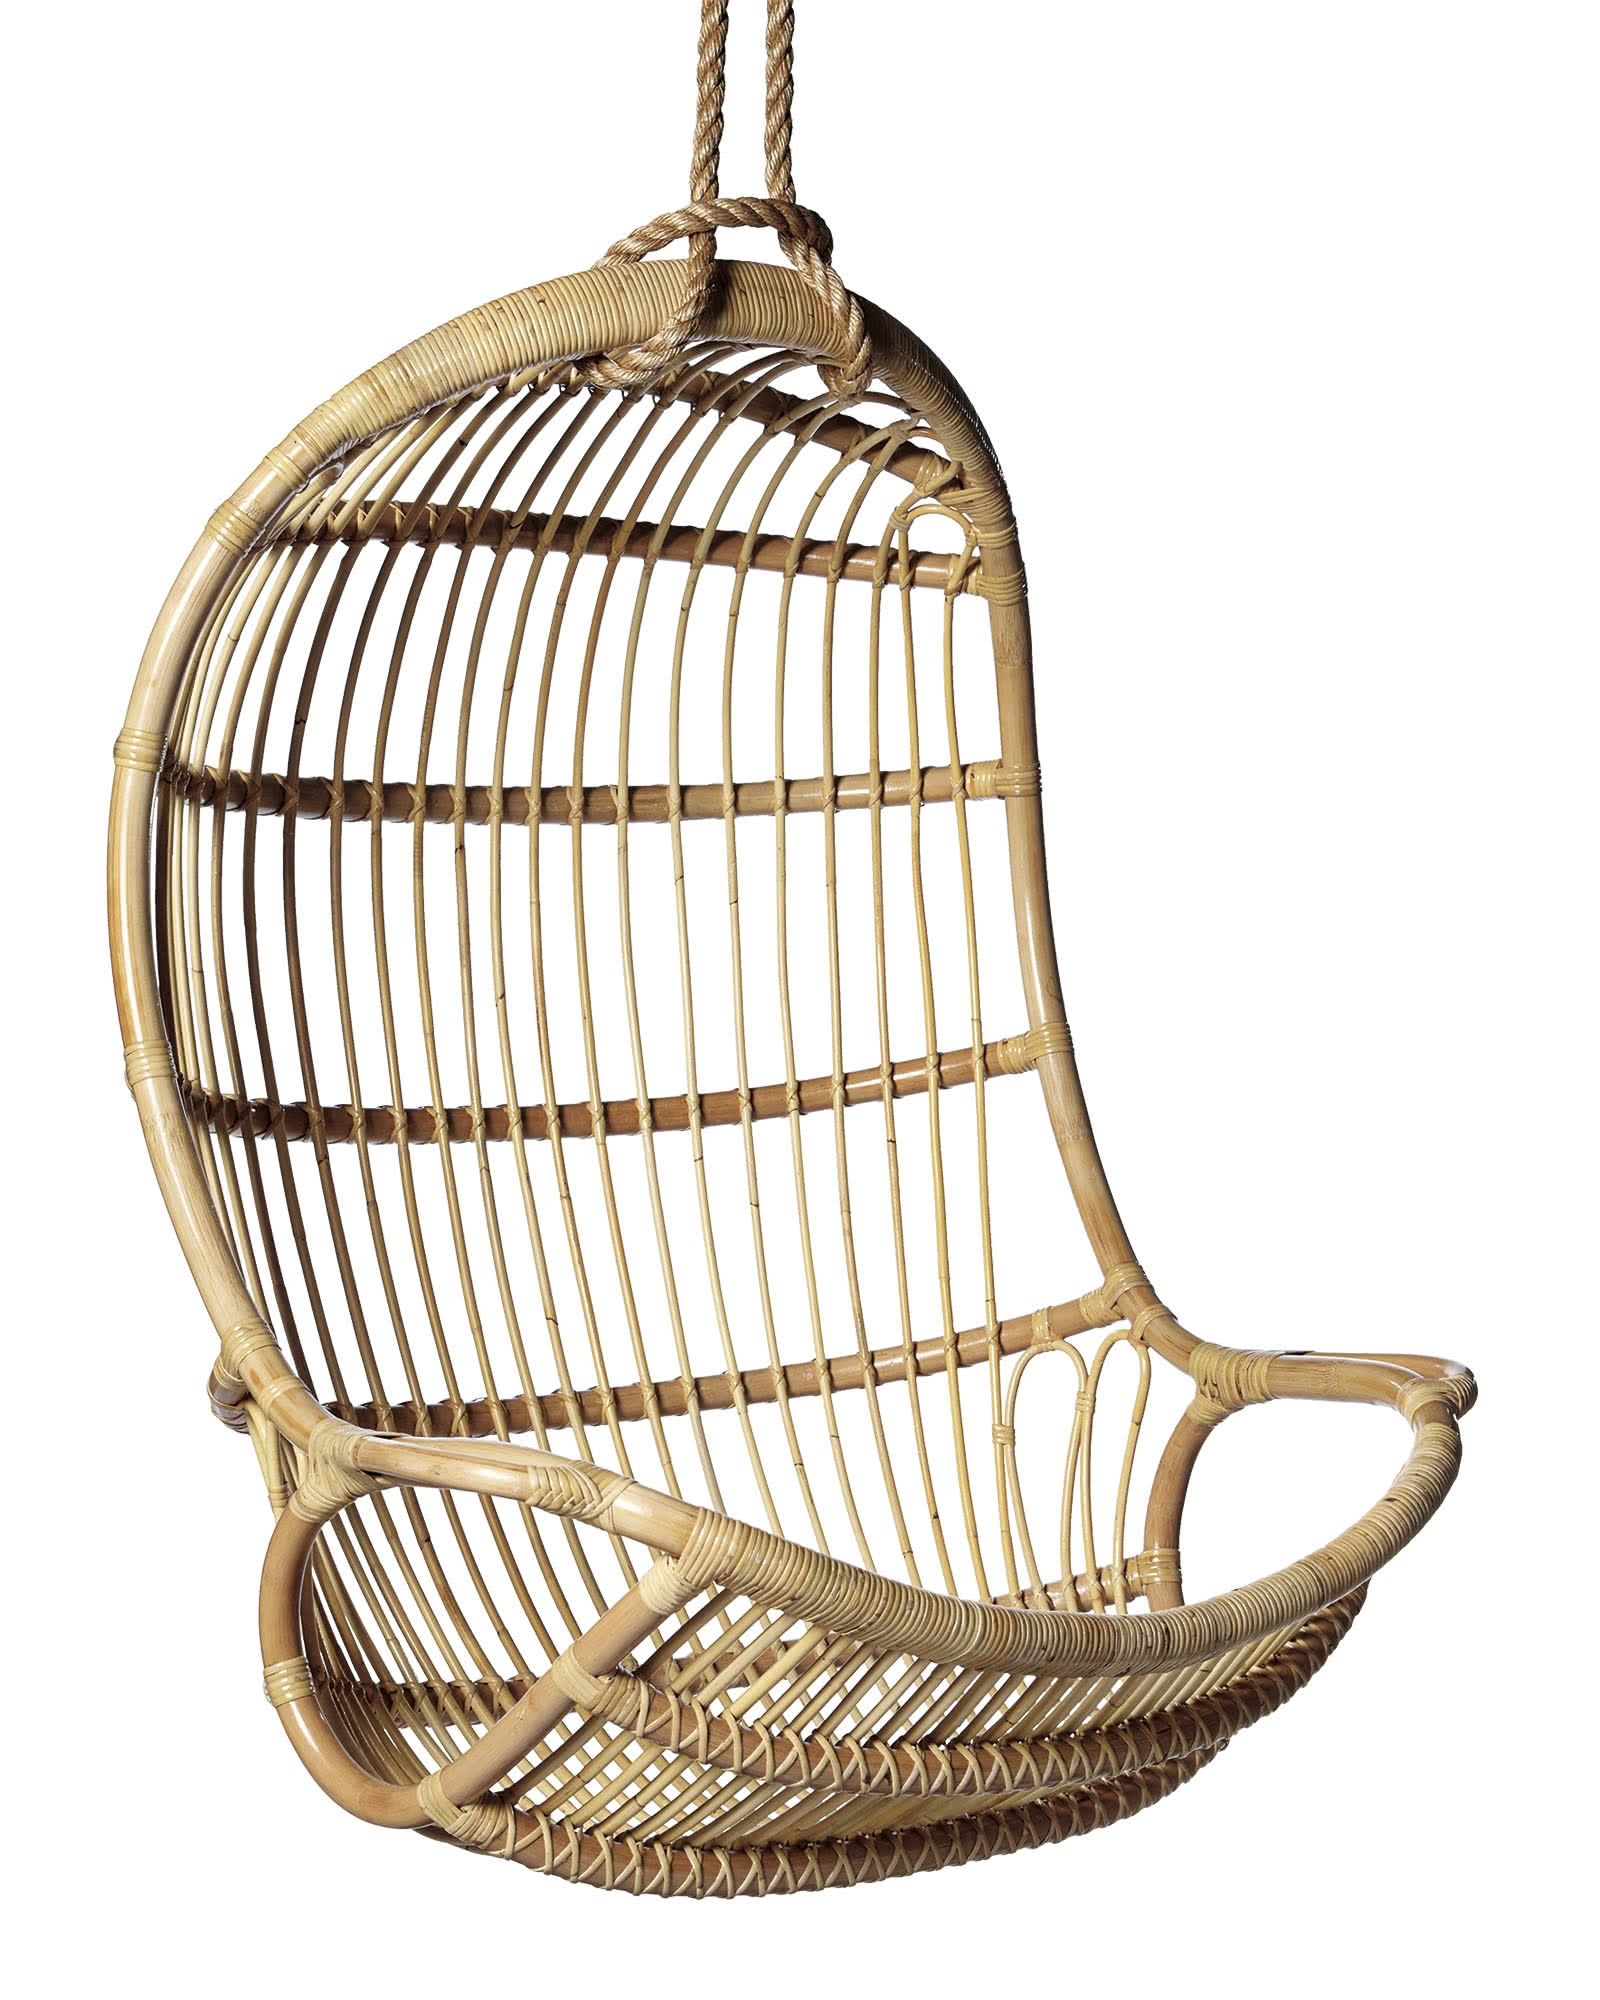 Hanging Rattan Chair - Image 0